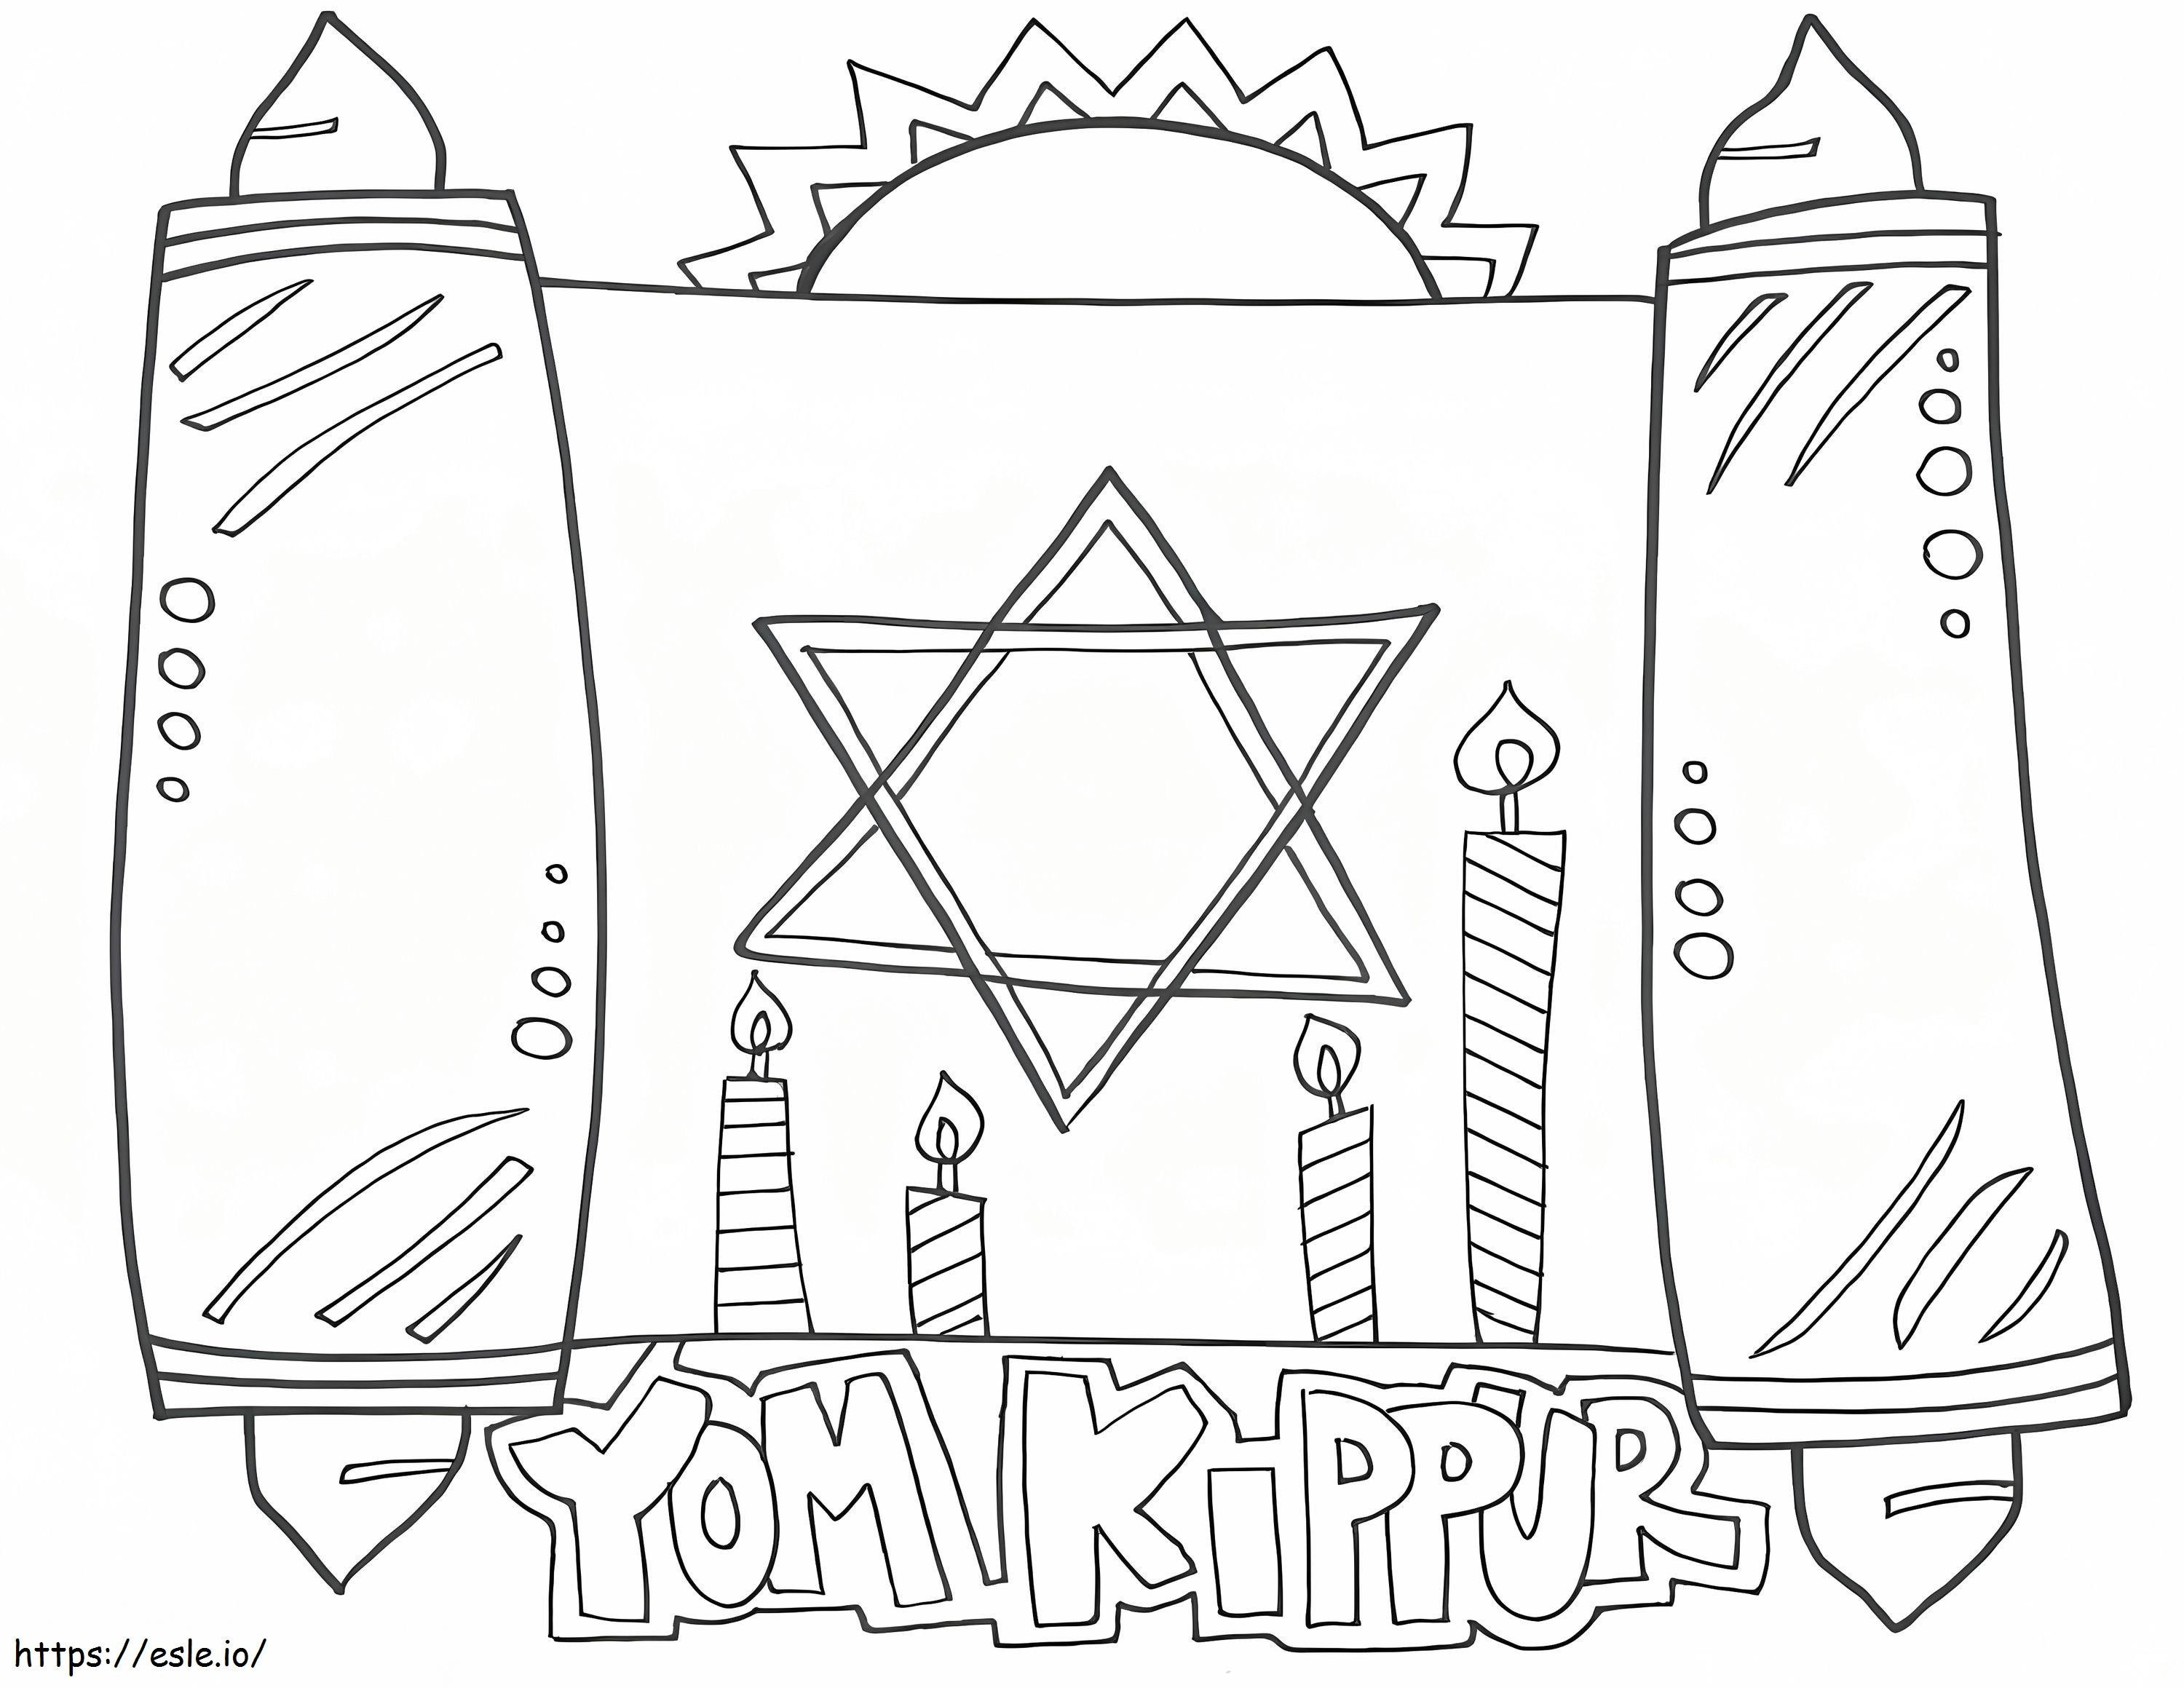 Yom Kippur 2 coloring page